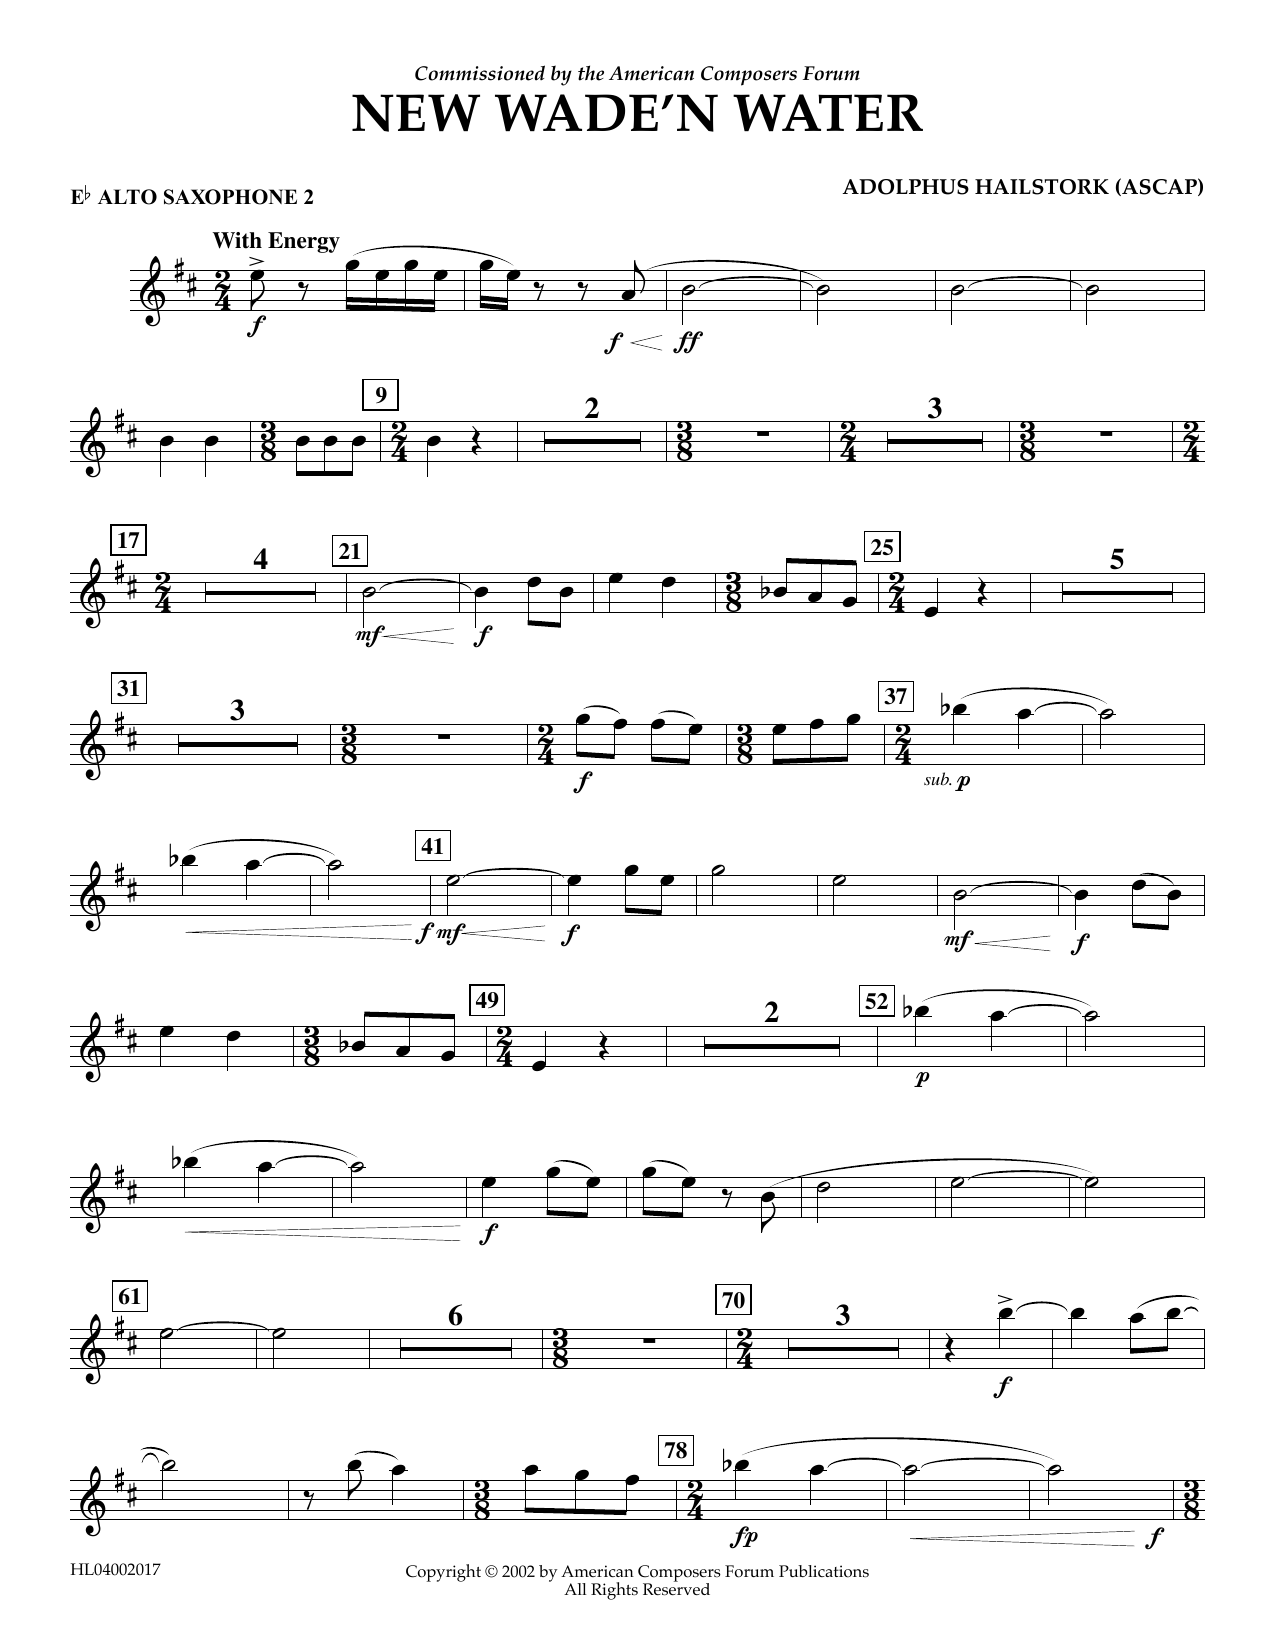 Download Adolphus Hailstork New Wade 'n Water - Eb Alto Saxophone 2 Sheet Music